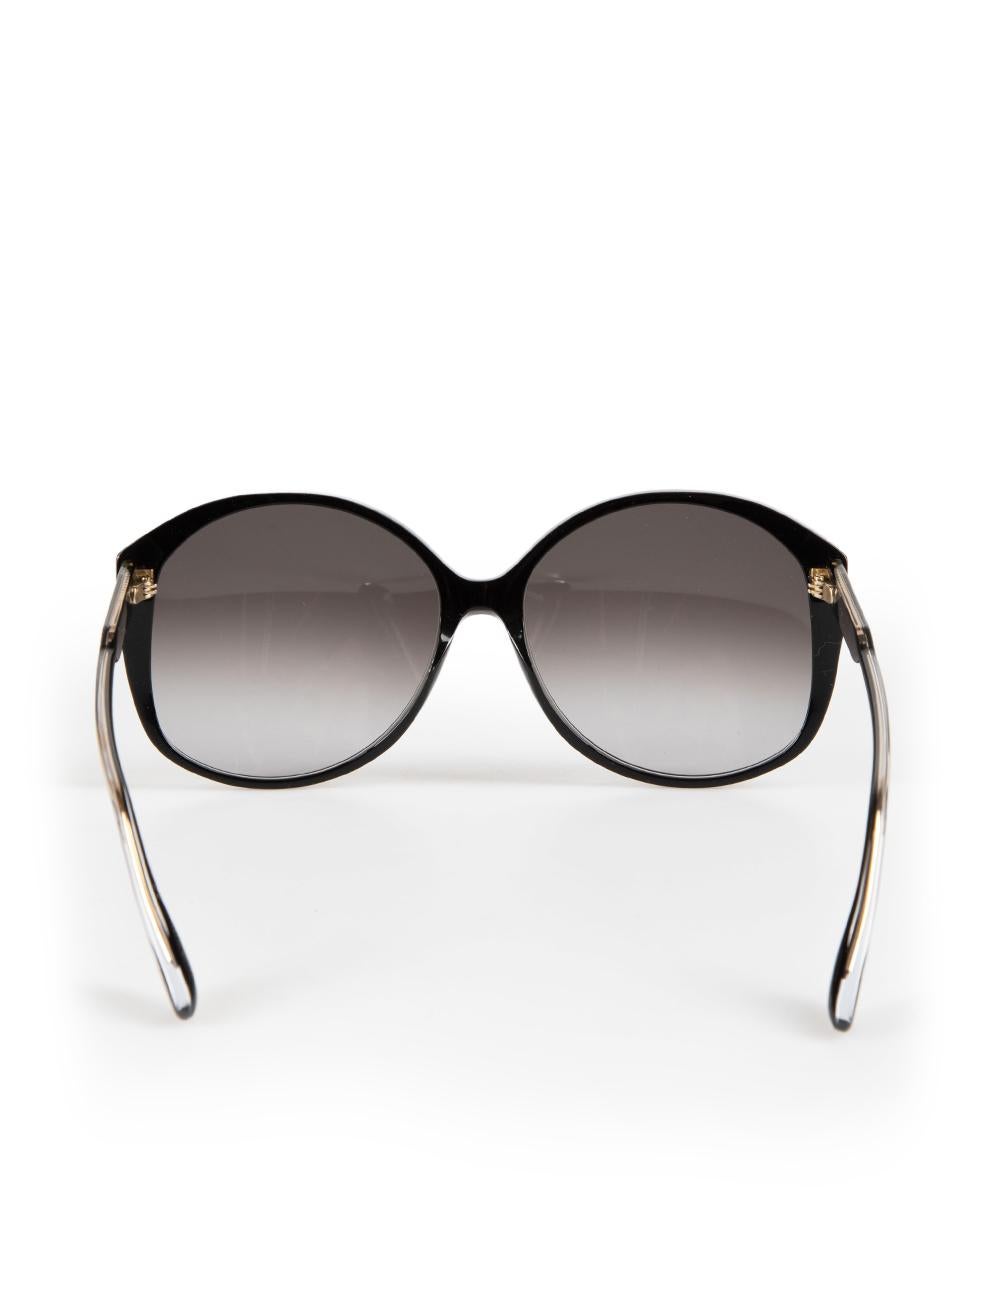 Women's Victoria Beckham Black Round Gradient Sunglasses For Sale